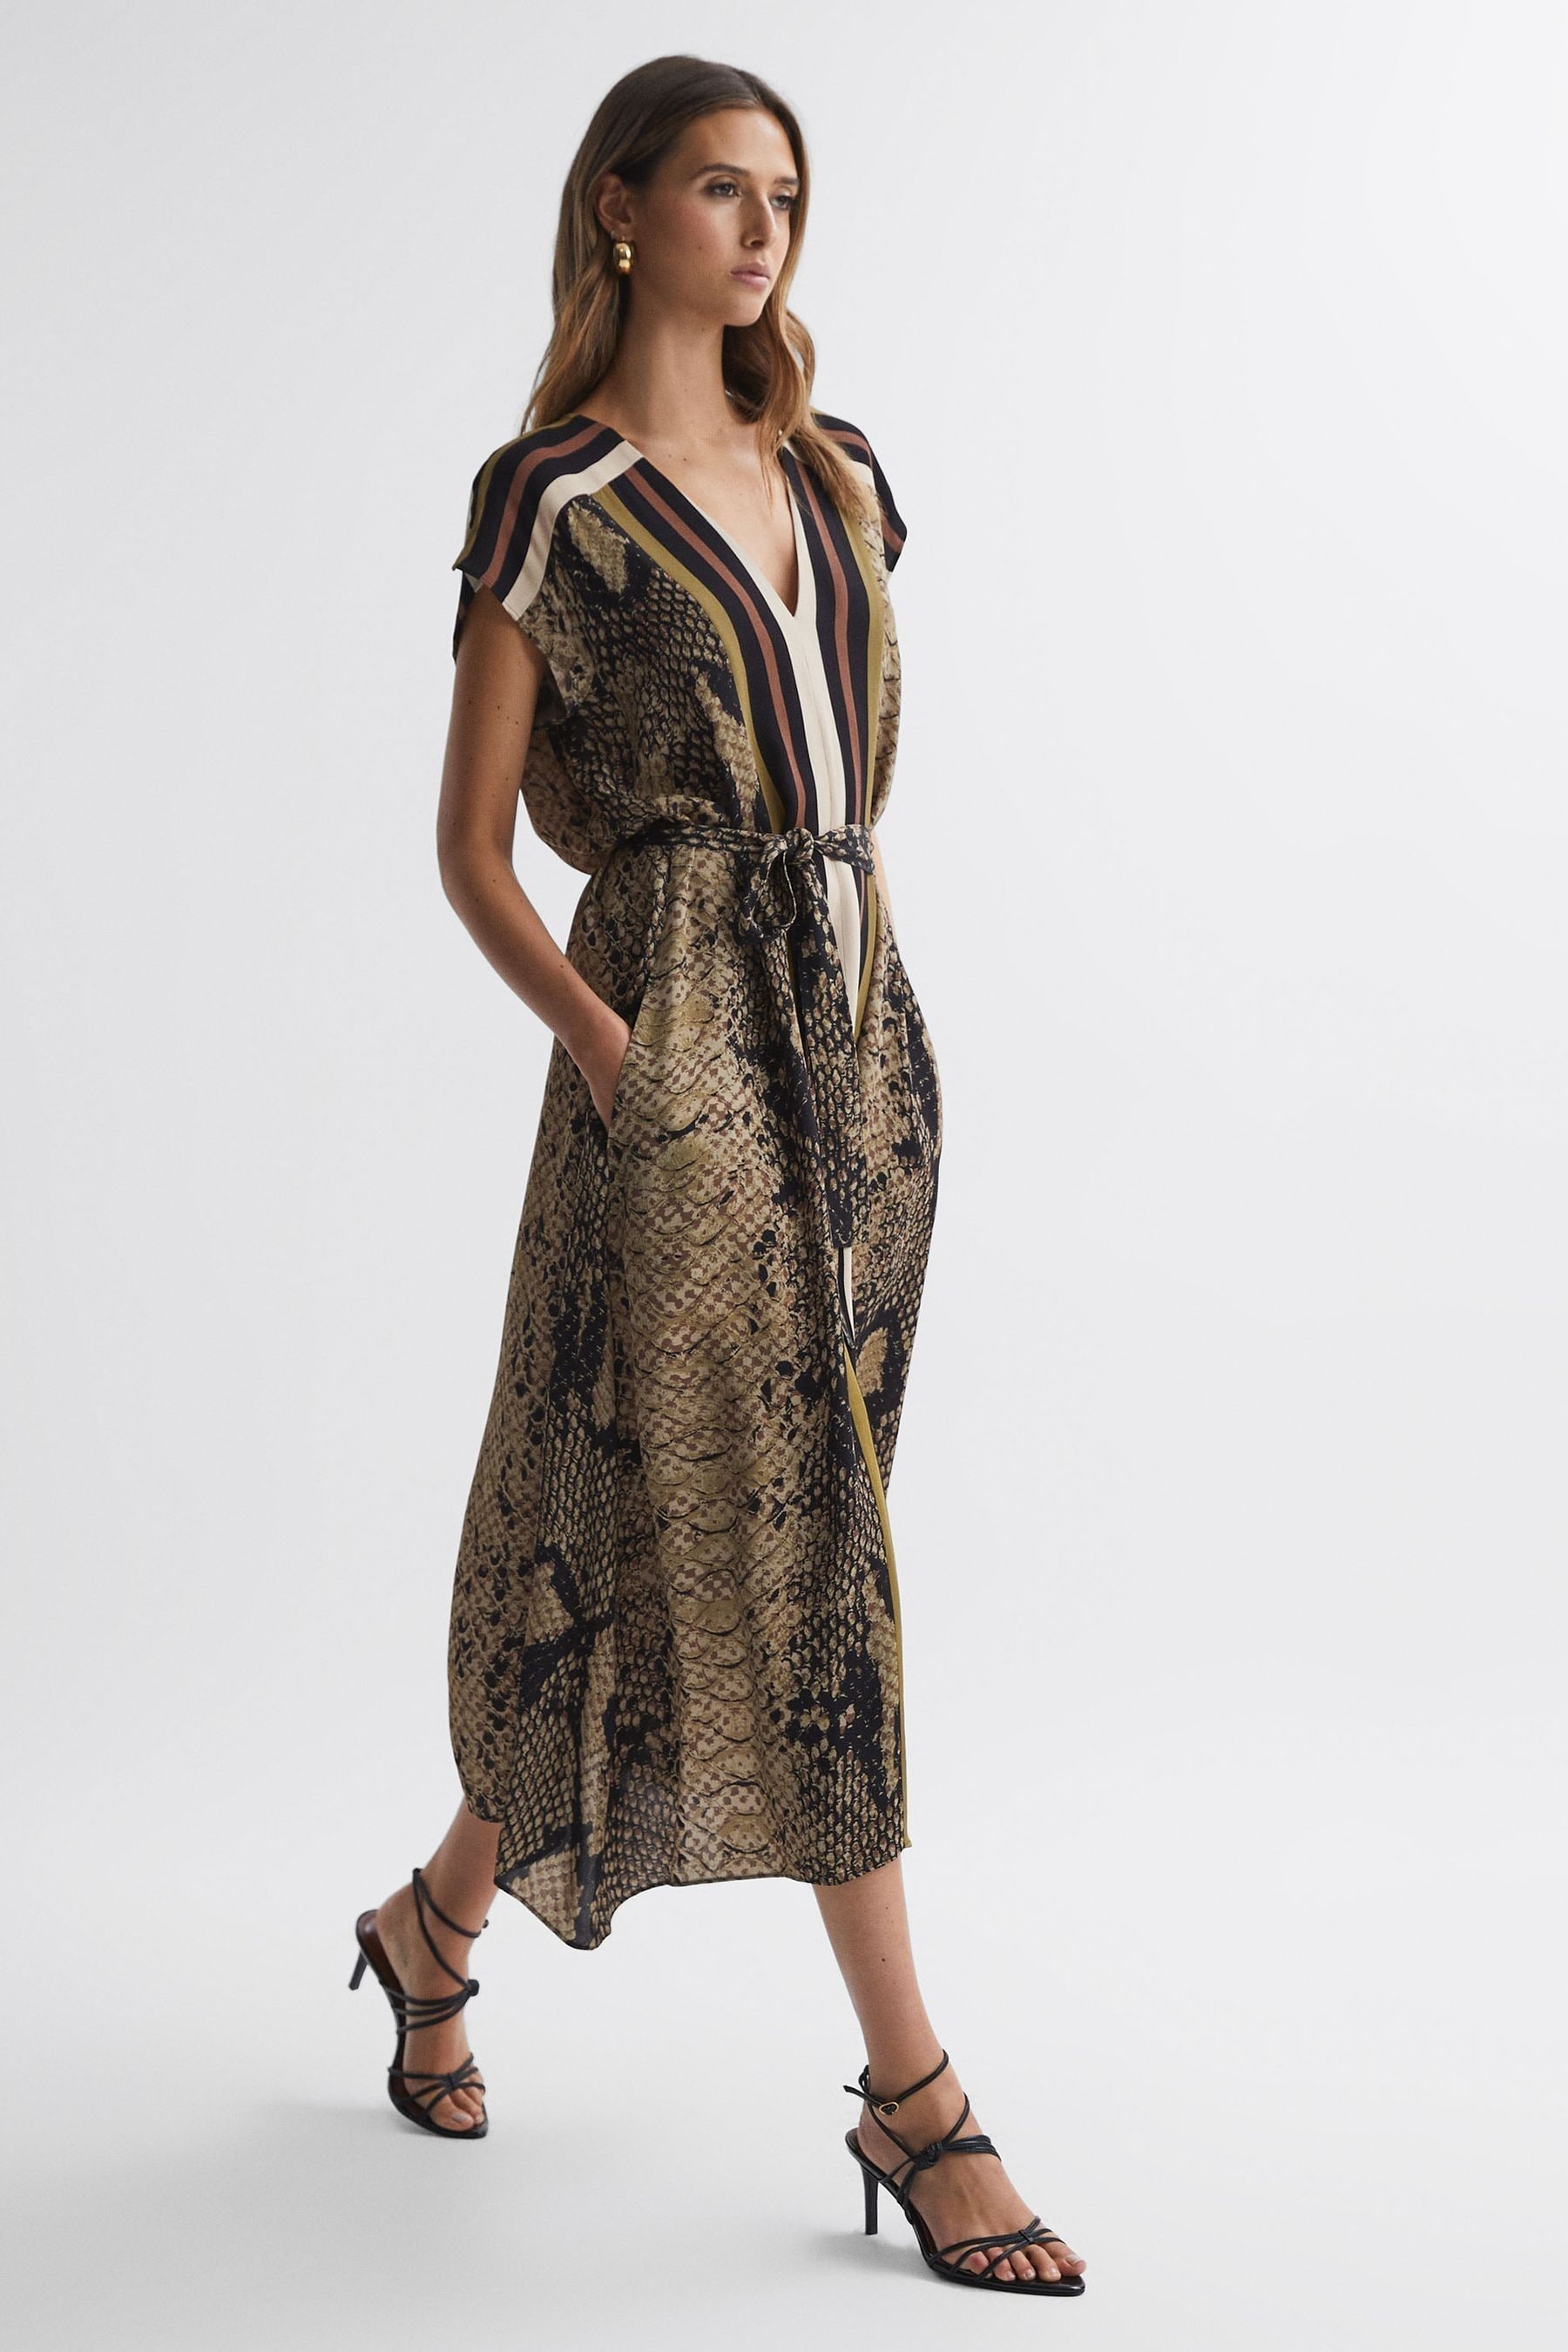 Reiss Bea - Brown Snake Print Midi Dress, Us 12